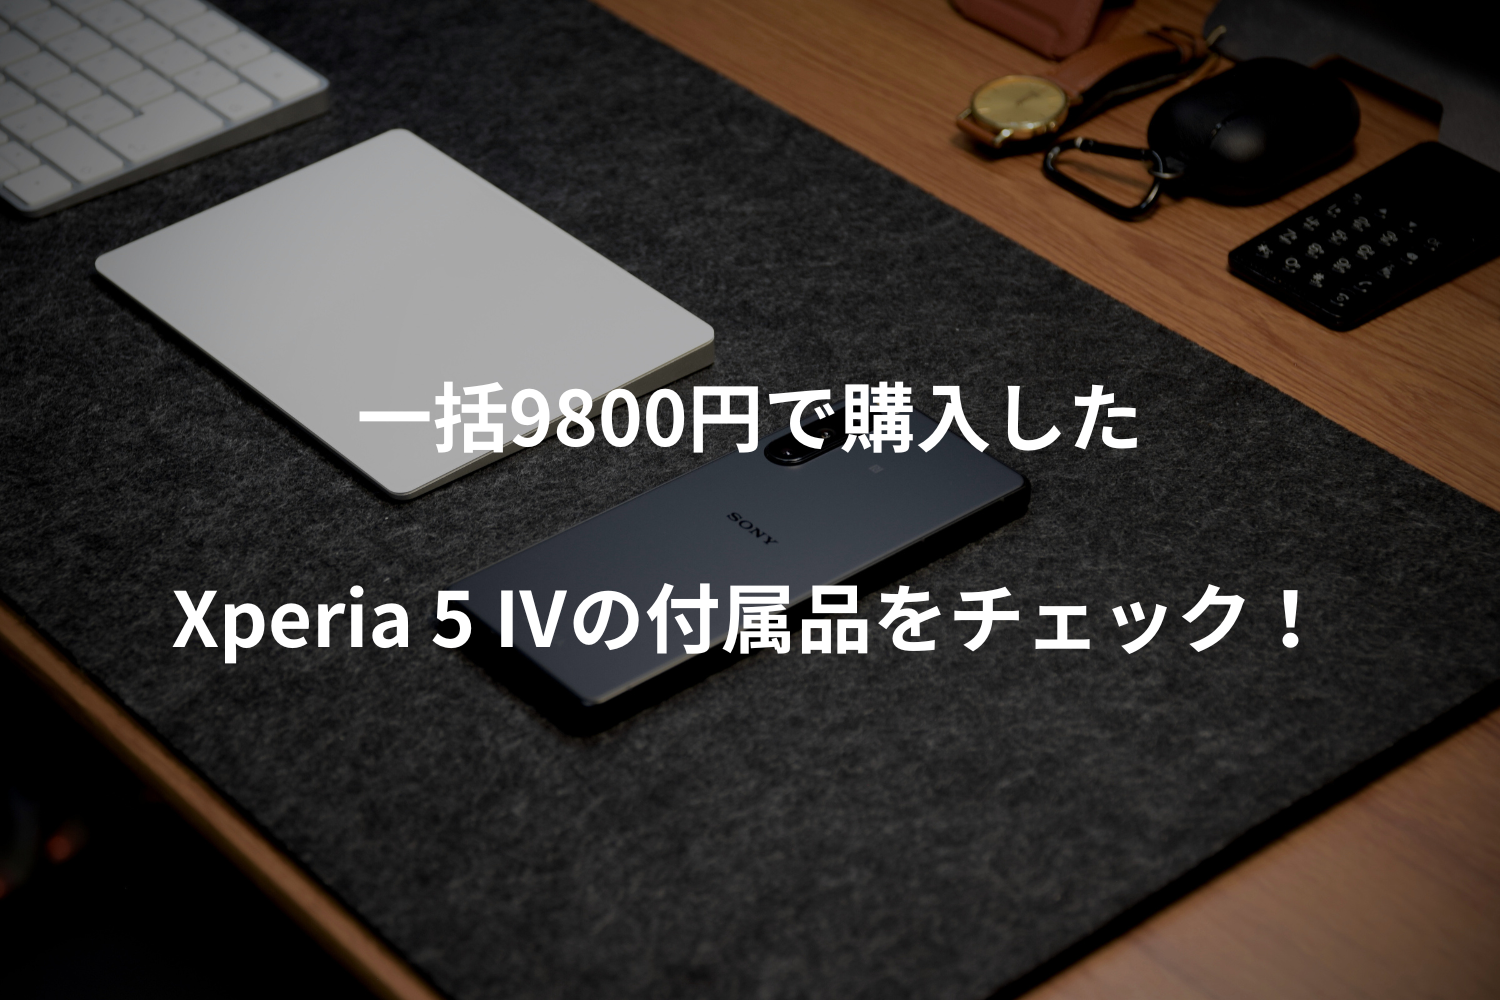 xperia-5-Ⅳ-softbank-information